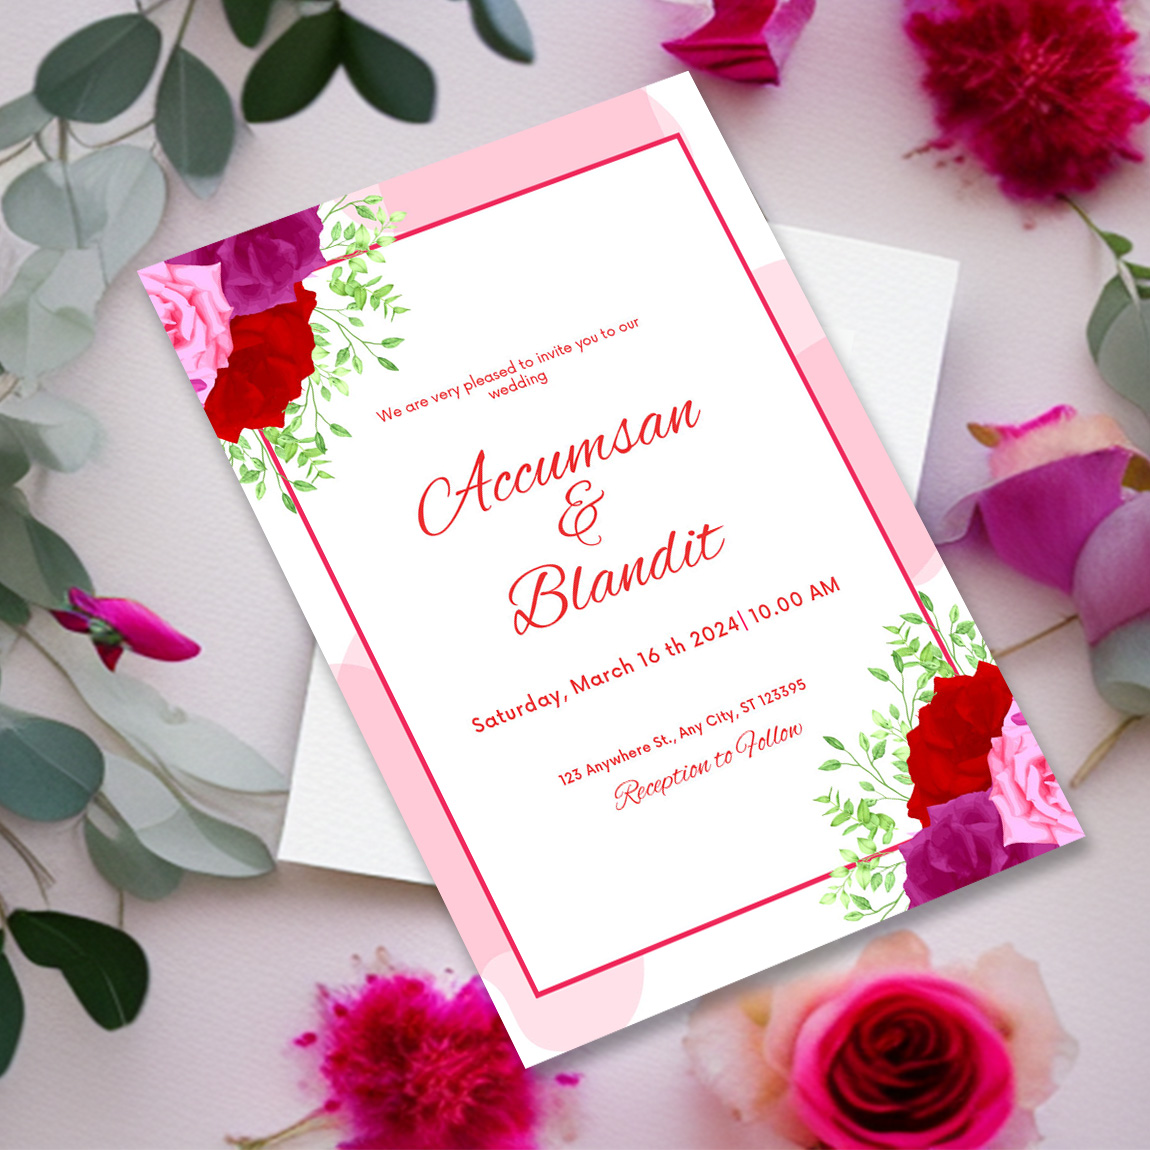 Image of gorgeous wedding invitation with roses.